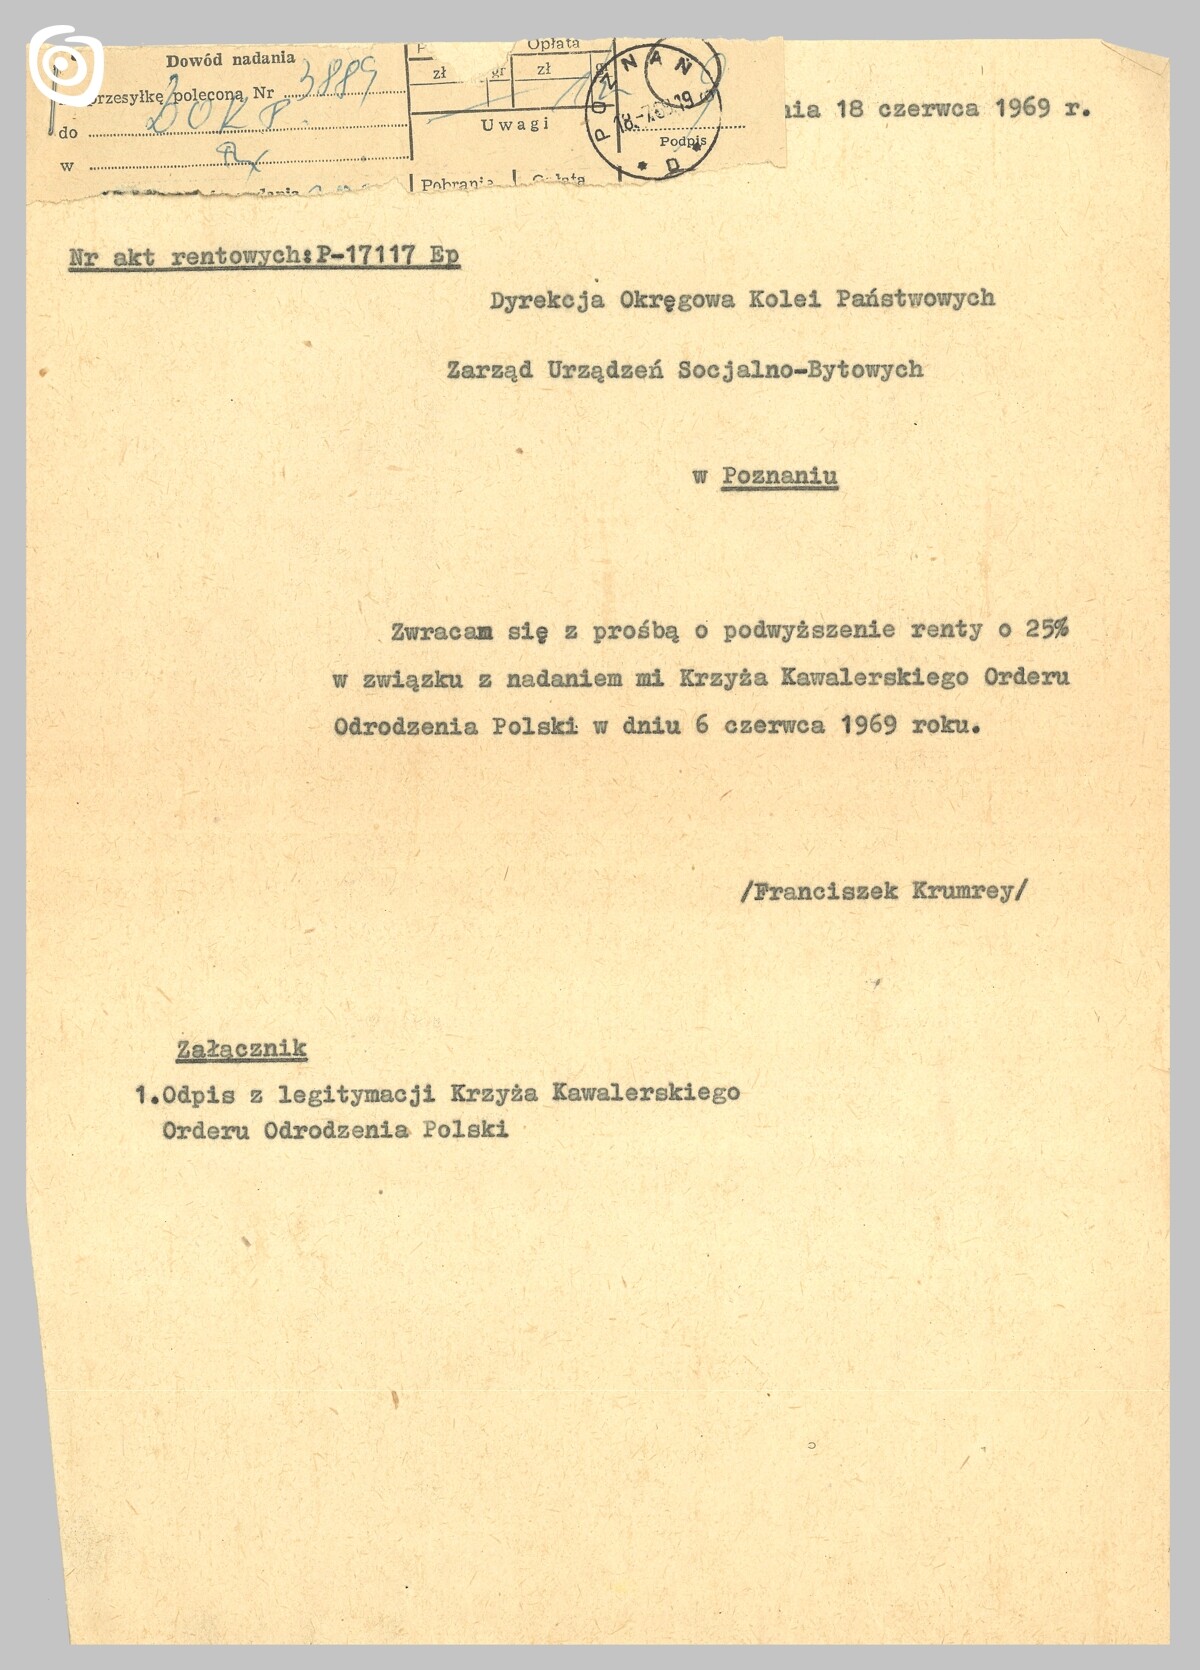 Dokument, Gniezno, 1969 r.